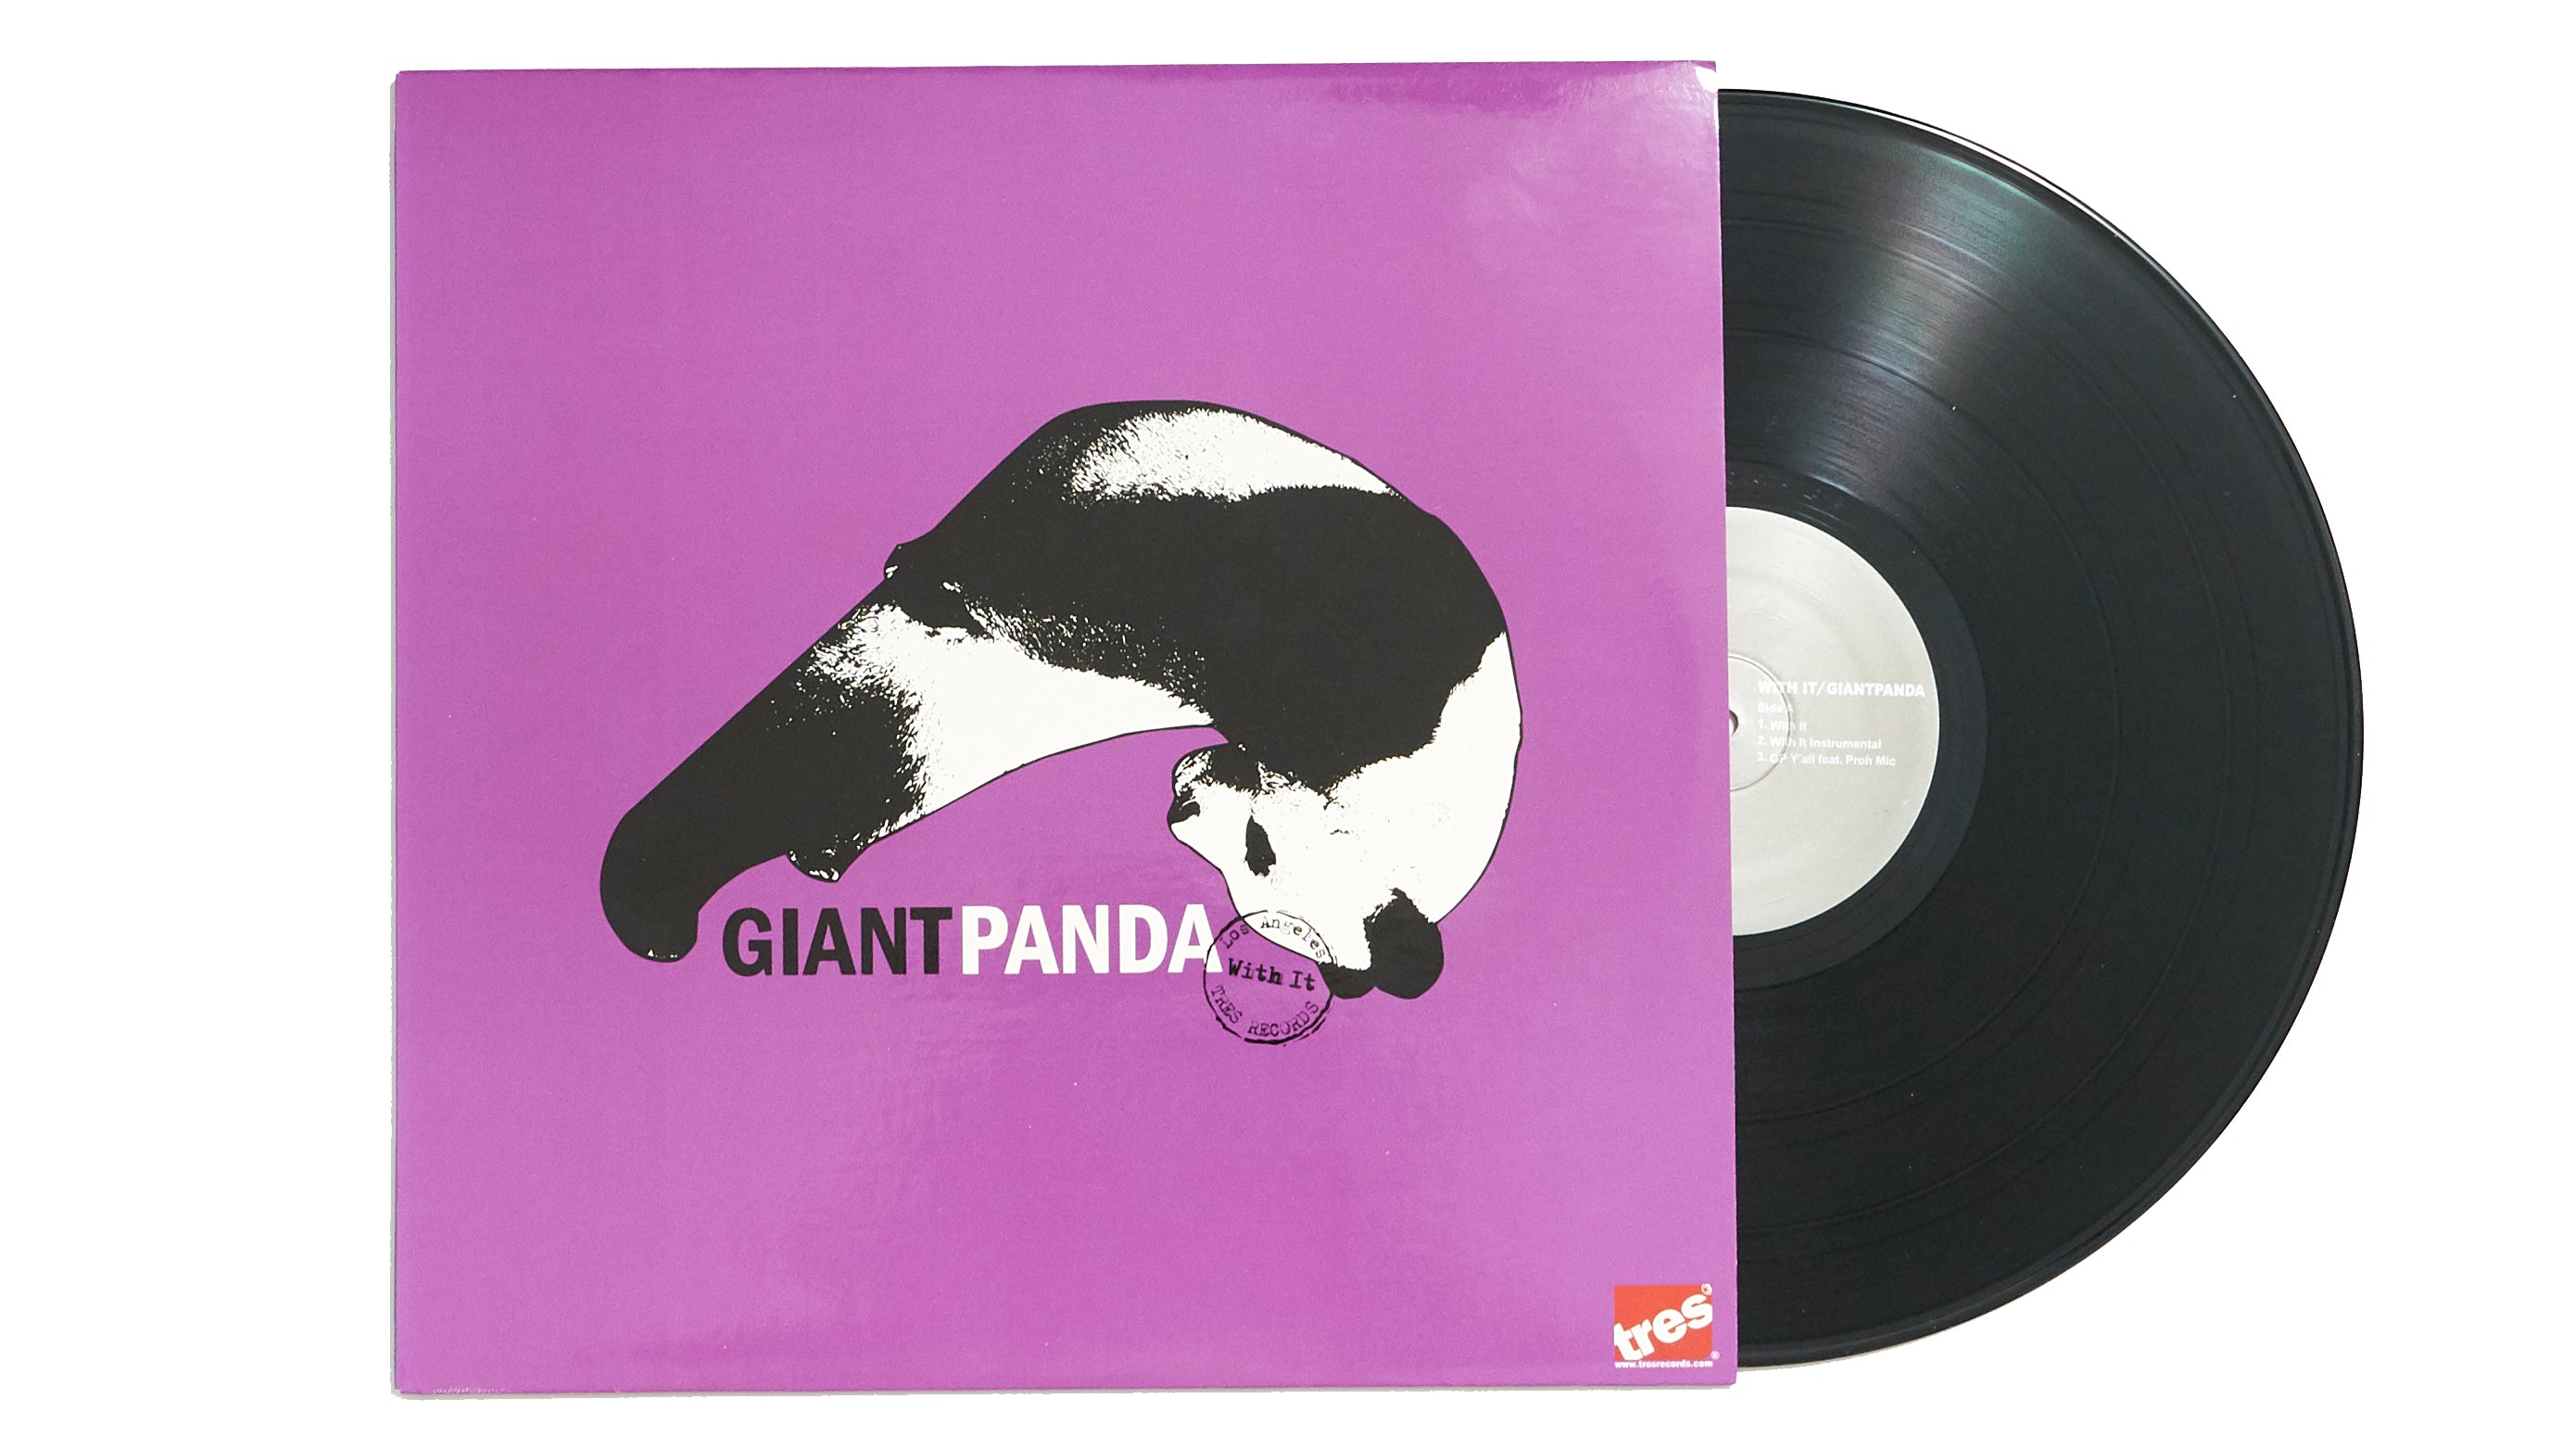 Giant Panda "With It" (12")